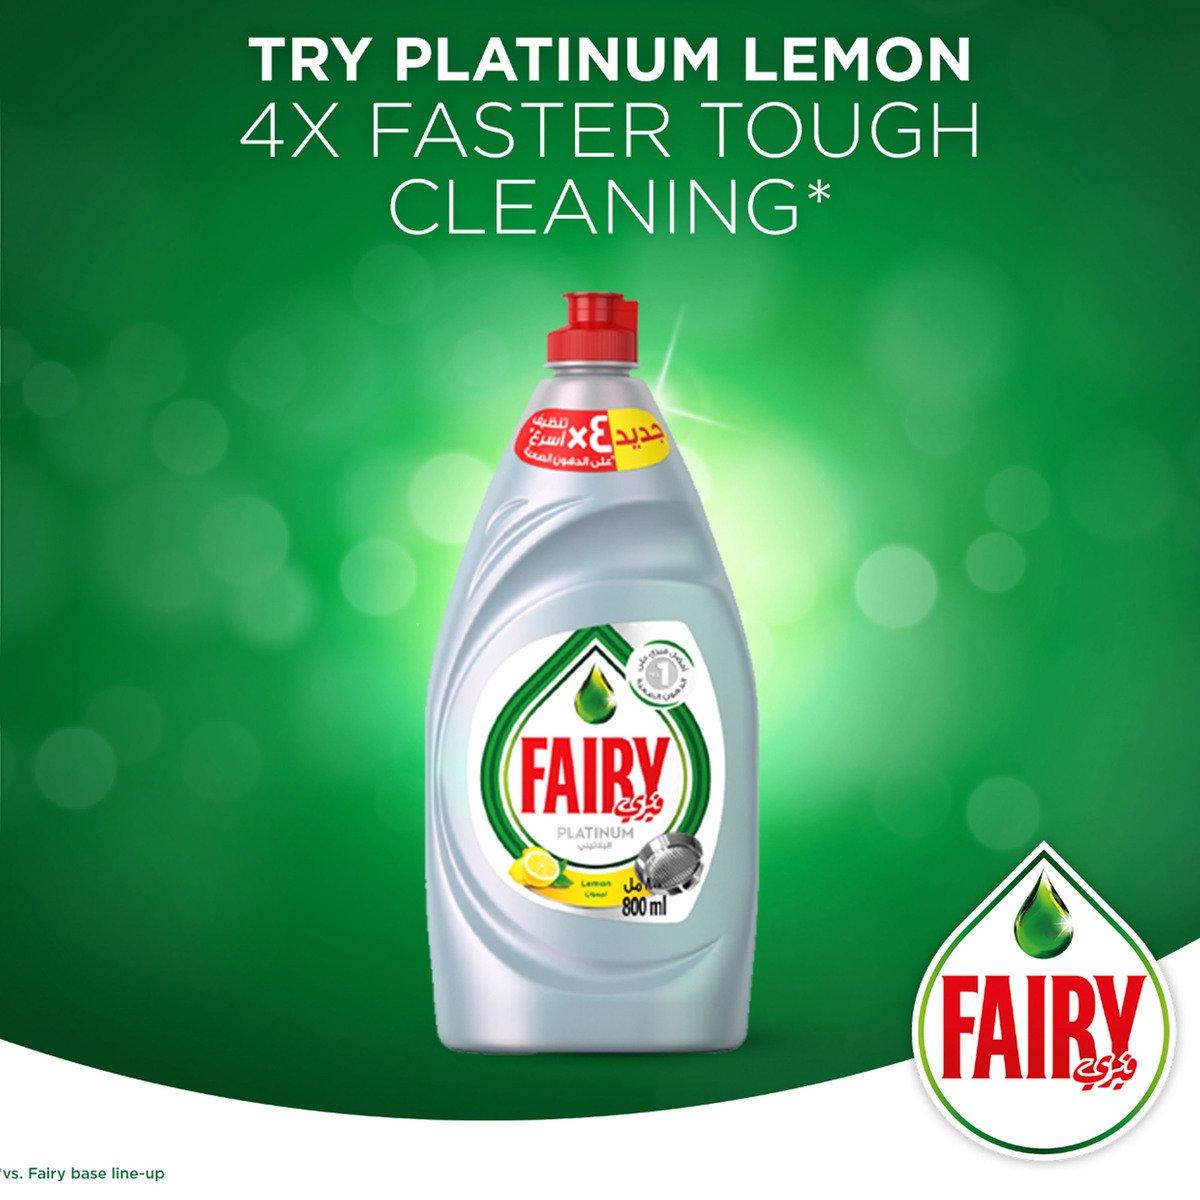 Fairy Lemon Dish Washing Liquid Soap 1.5Litre